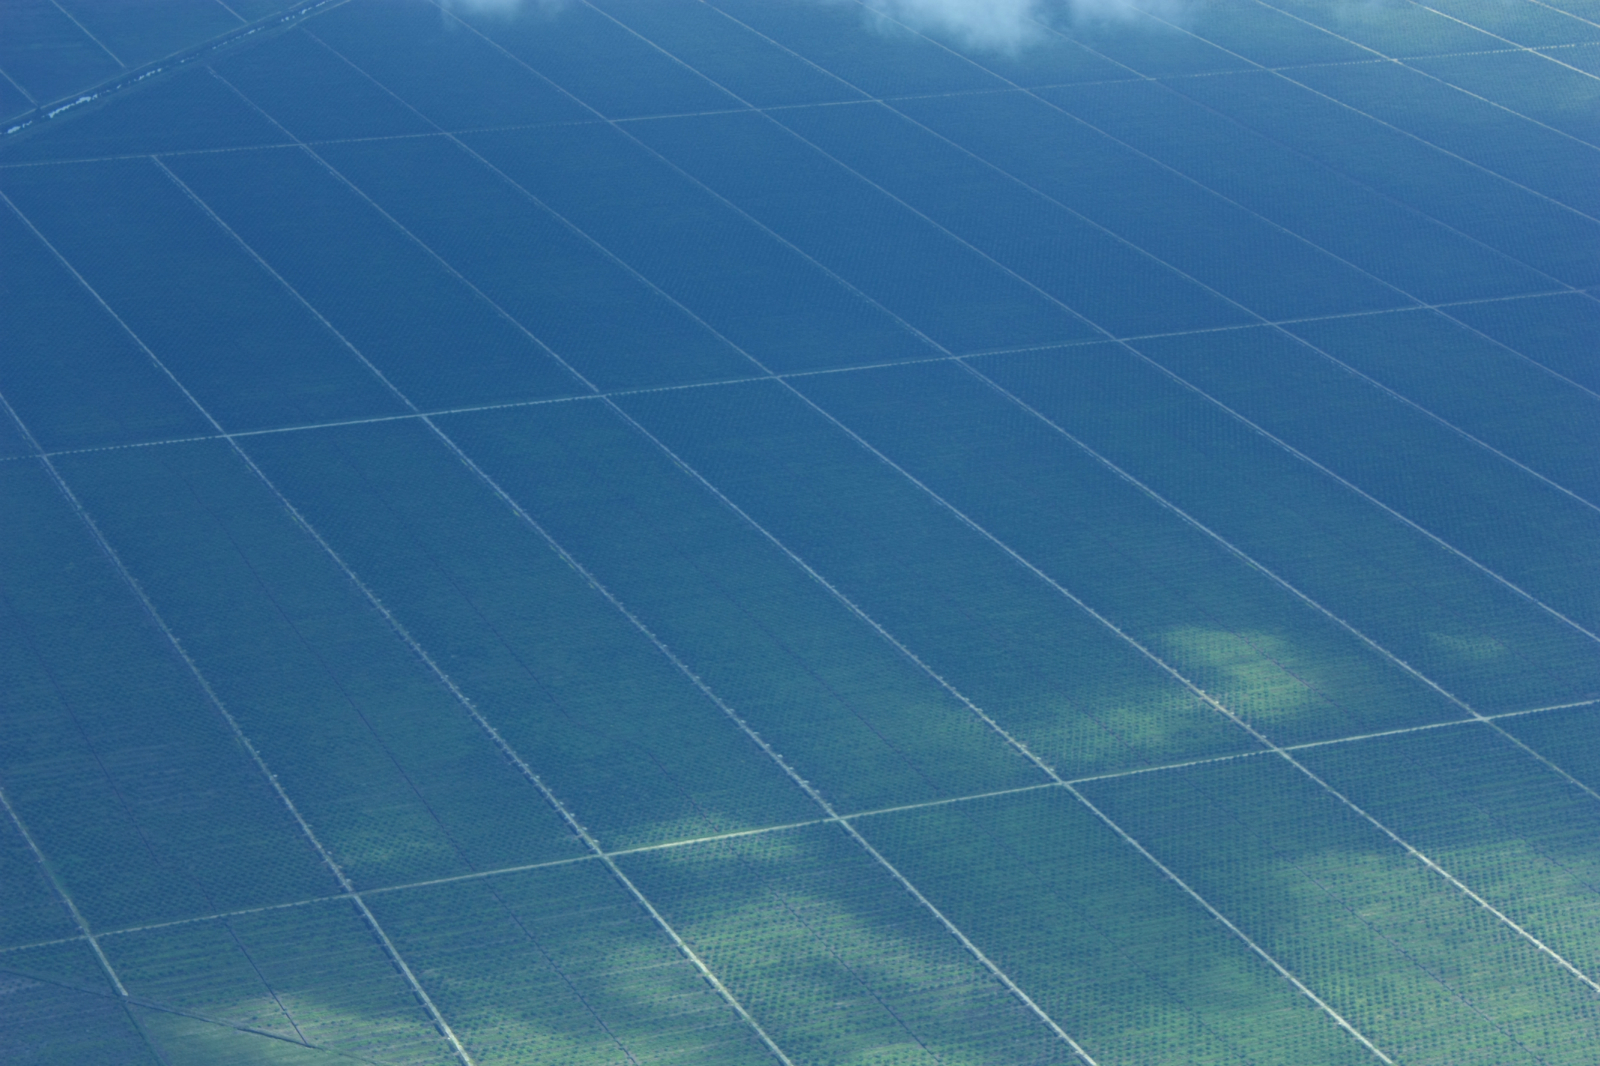 palm oil plantation aerial photo